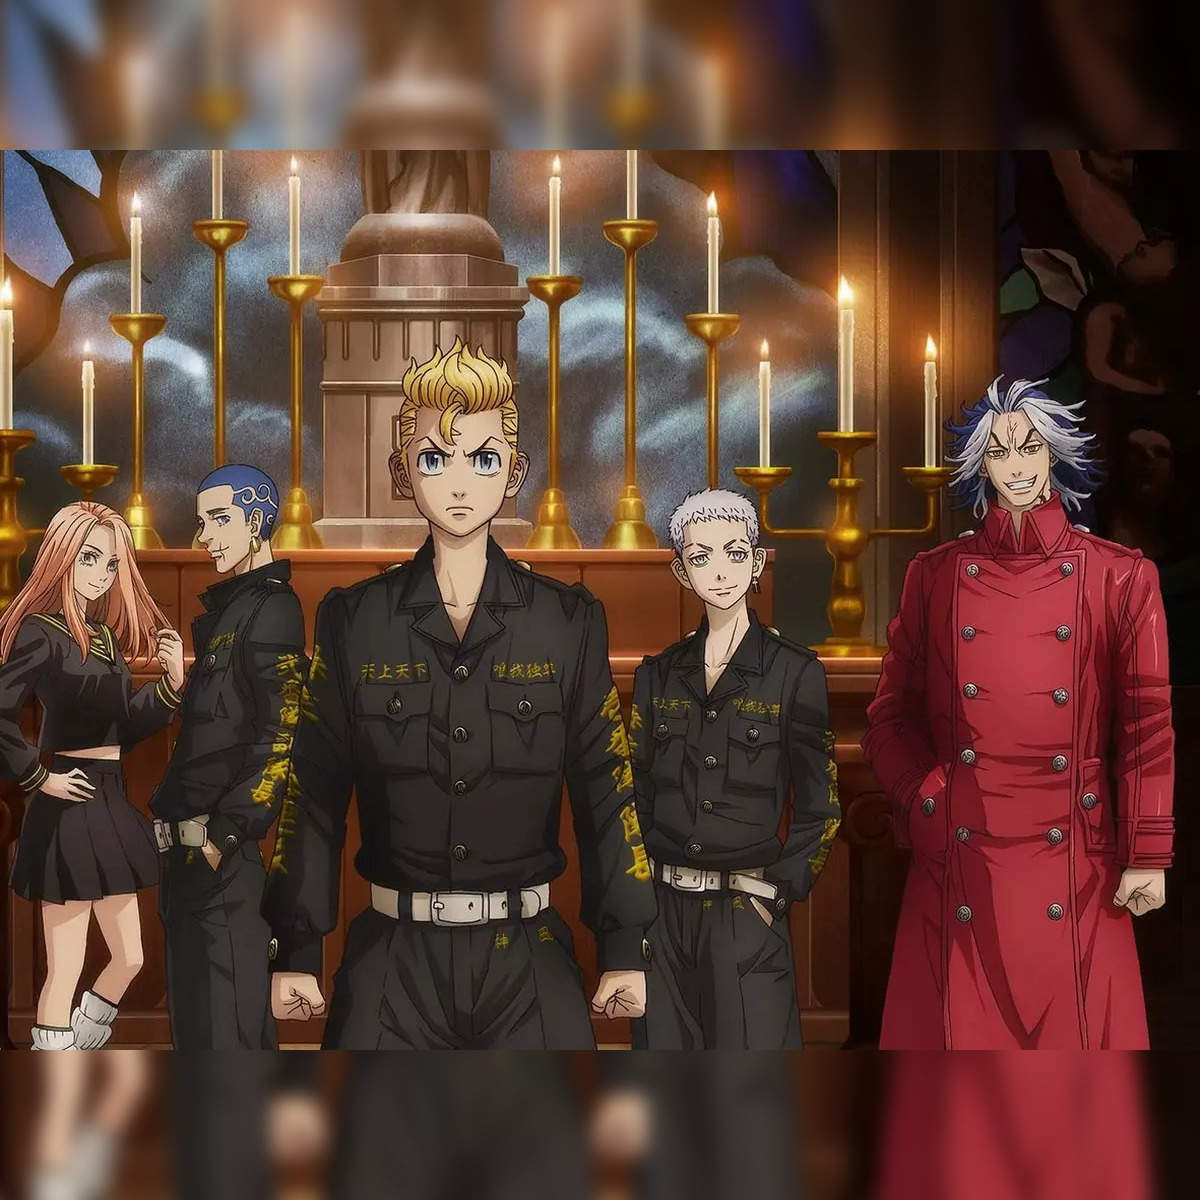 Tokyo Revengers: Tenjiku Arc Anime Announced, Reveals Key Visual